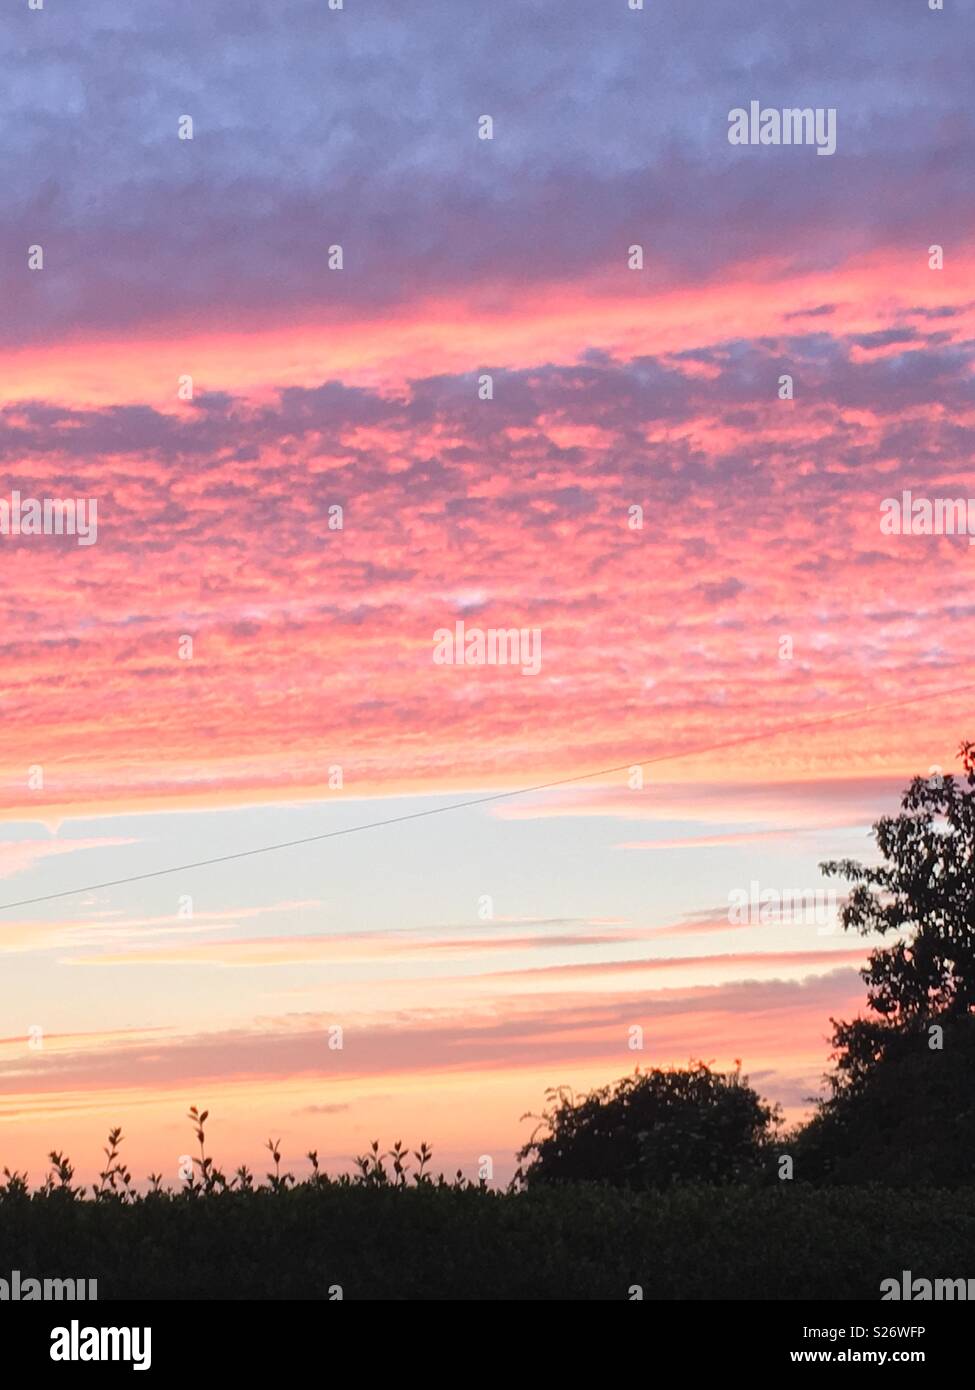 Sunset night sky with trees Stock Photo